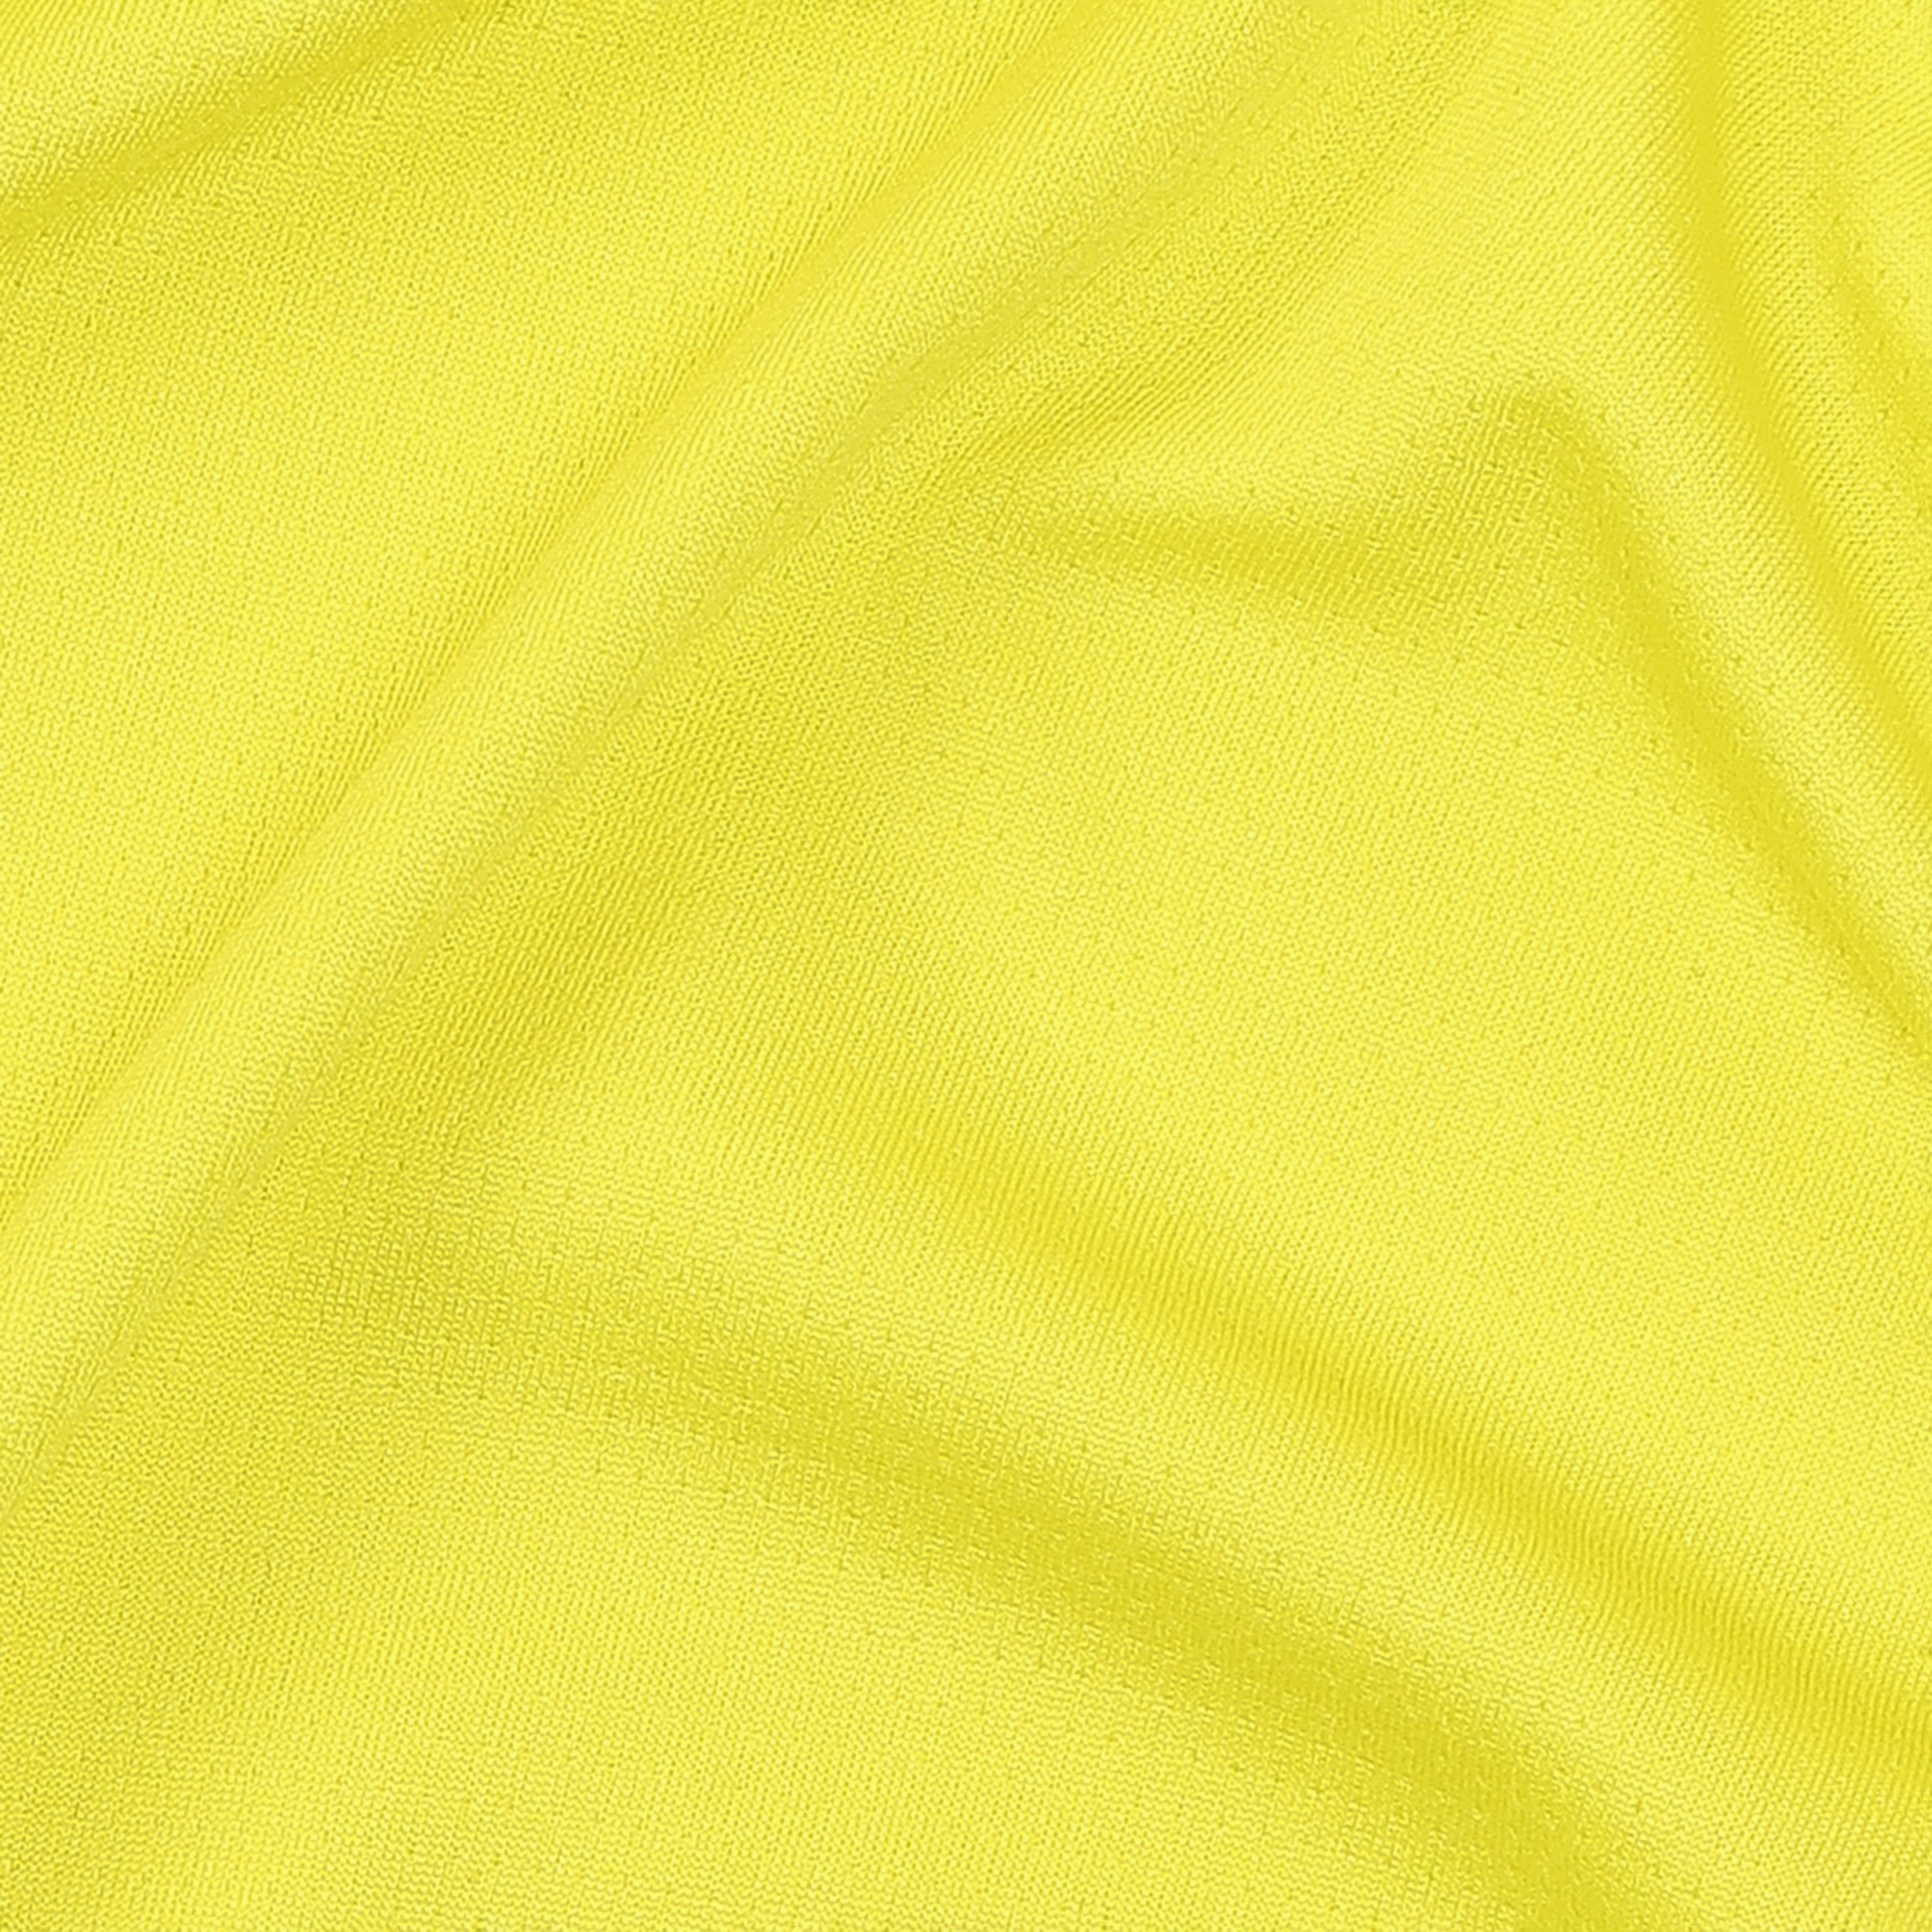 Power Tee Yellow close up fabric